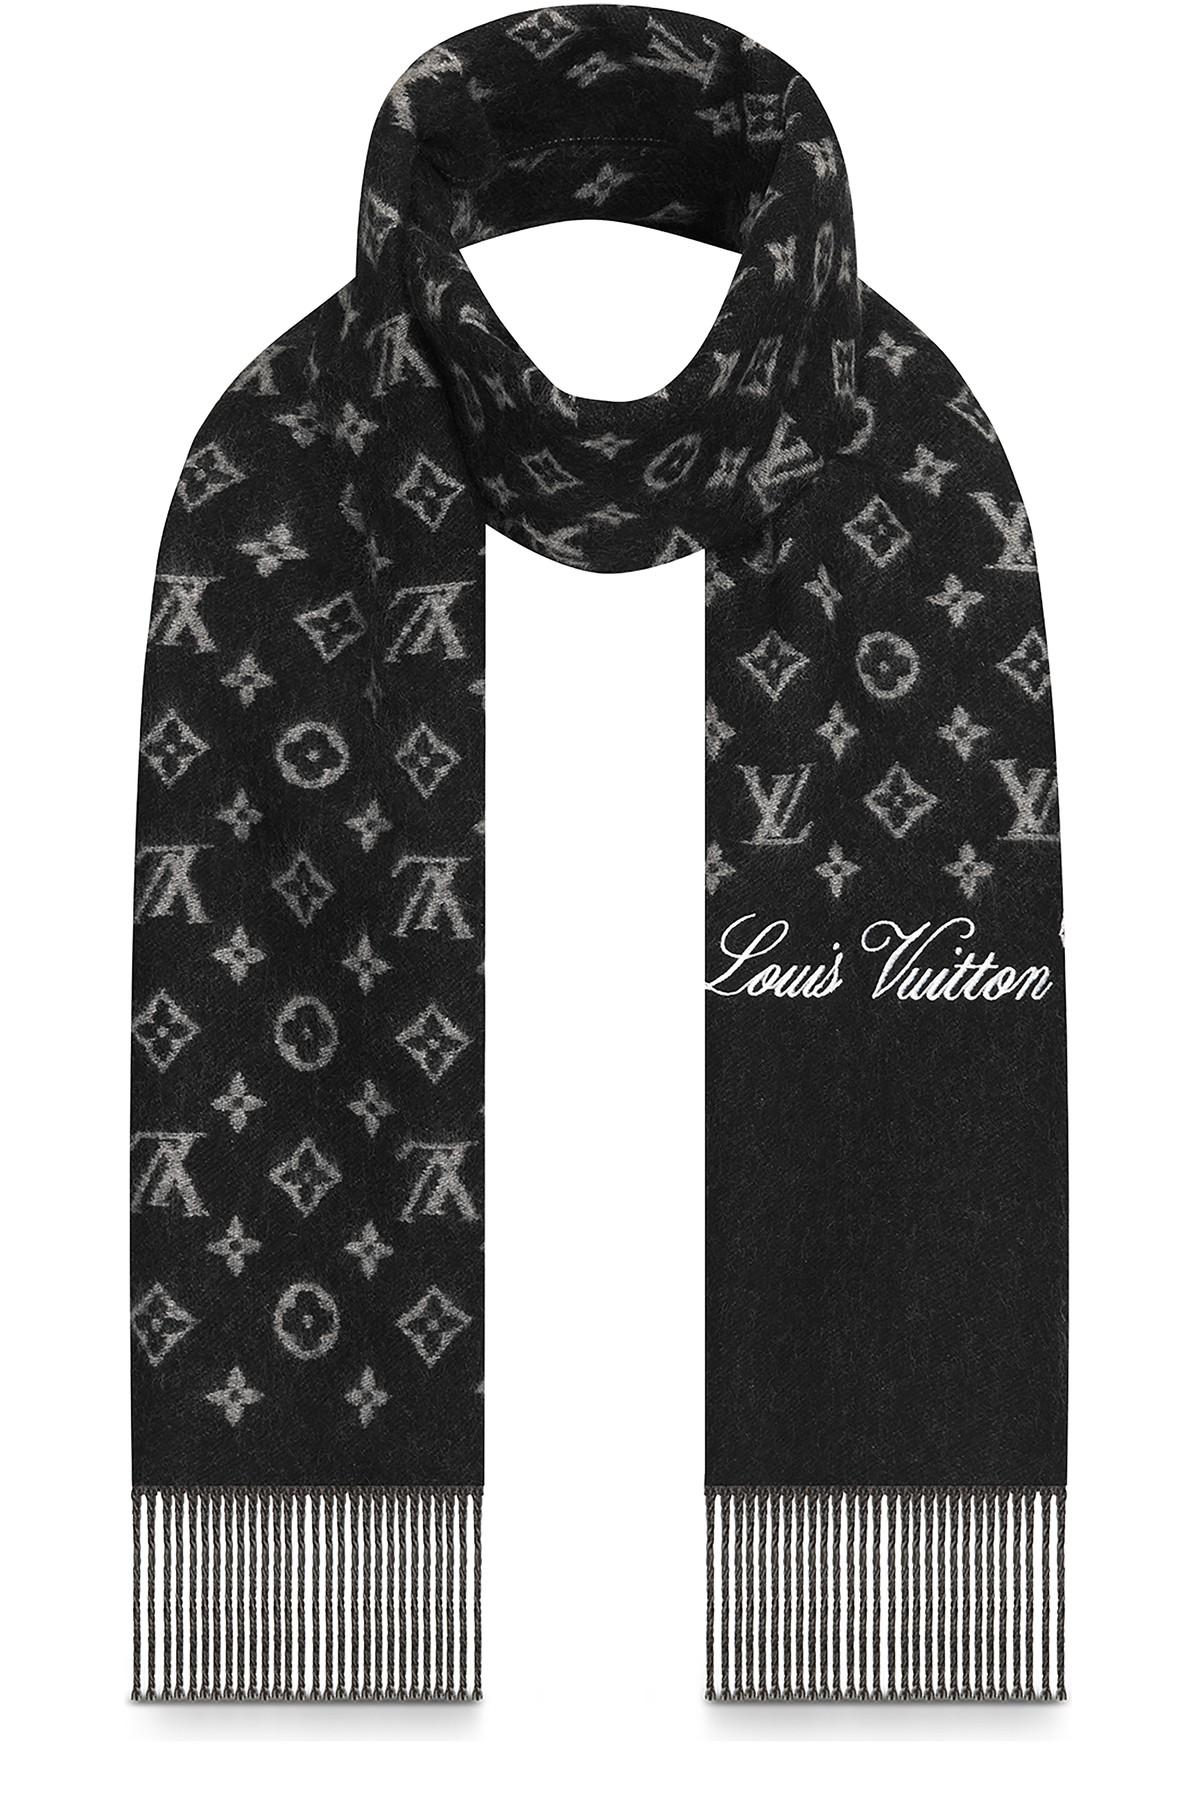 Louis Vuitton Black On Black Scarf